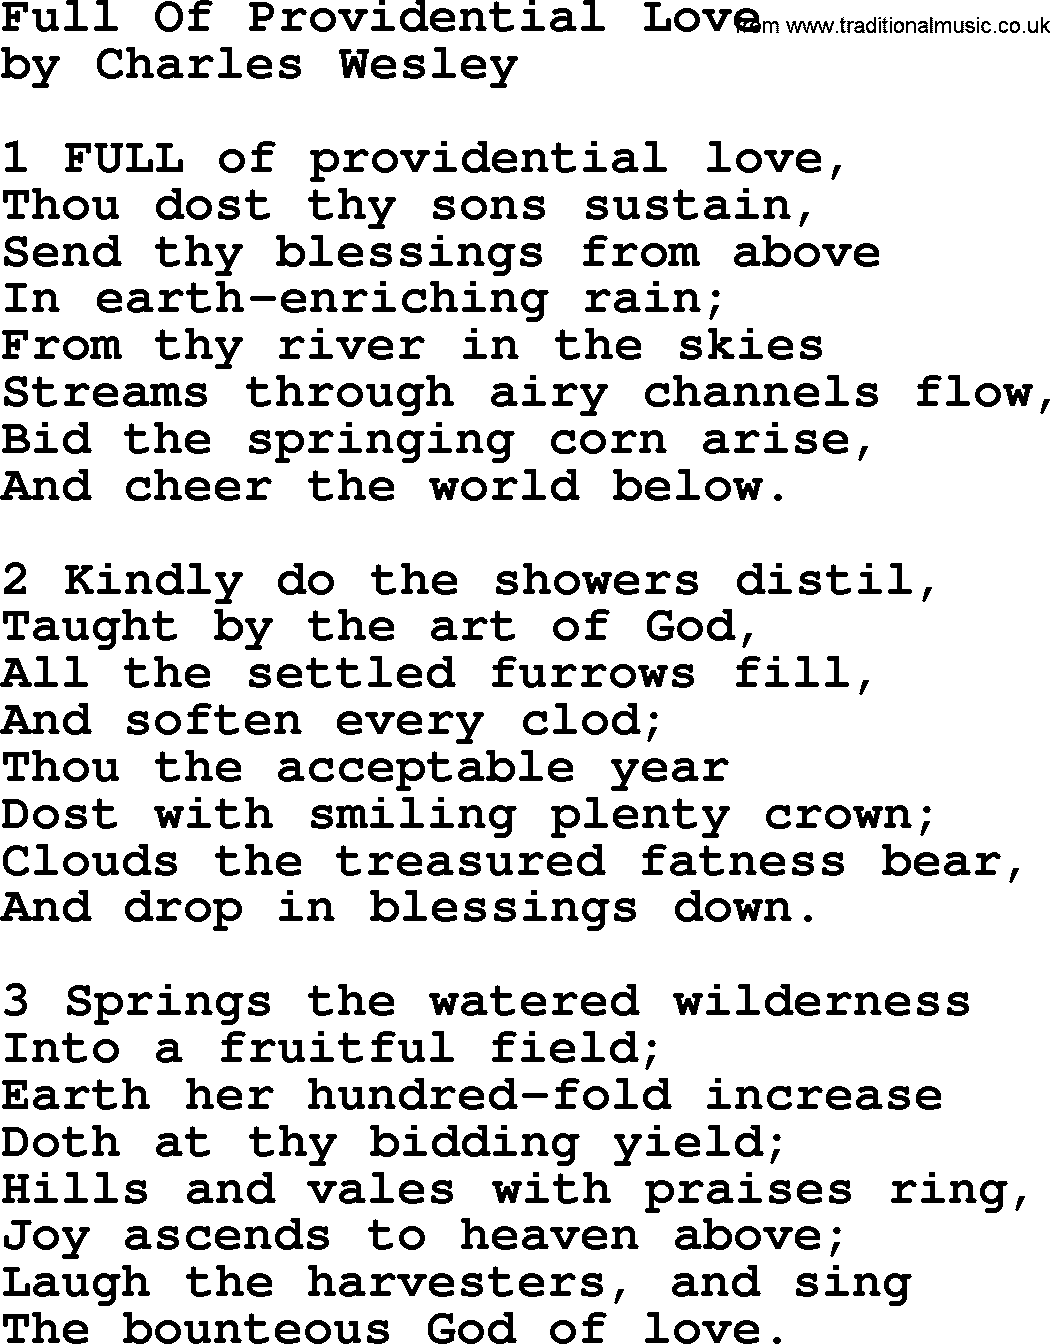 Charles Wesley hymn: Full Of Providential Love, lyrics